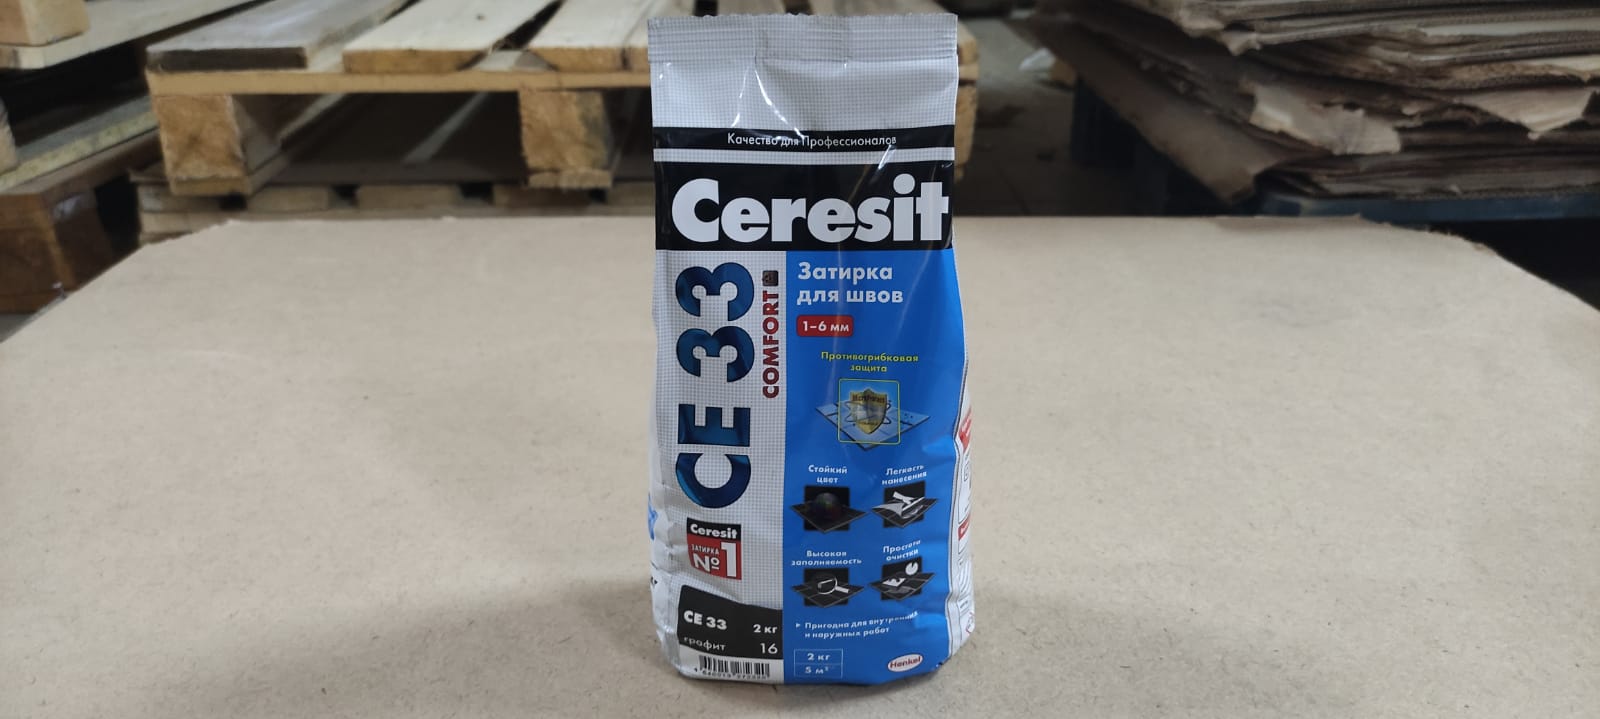 Затирка для швов 1-6 мм Ceresit / Церезит СЕ 33 Comfort 2 кг (цвет: Графит)